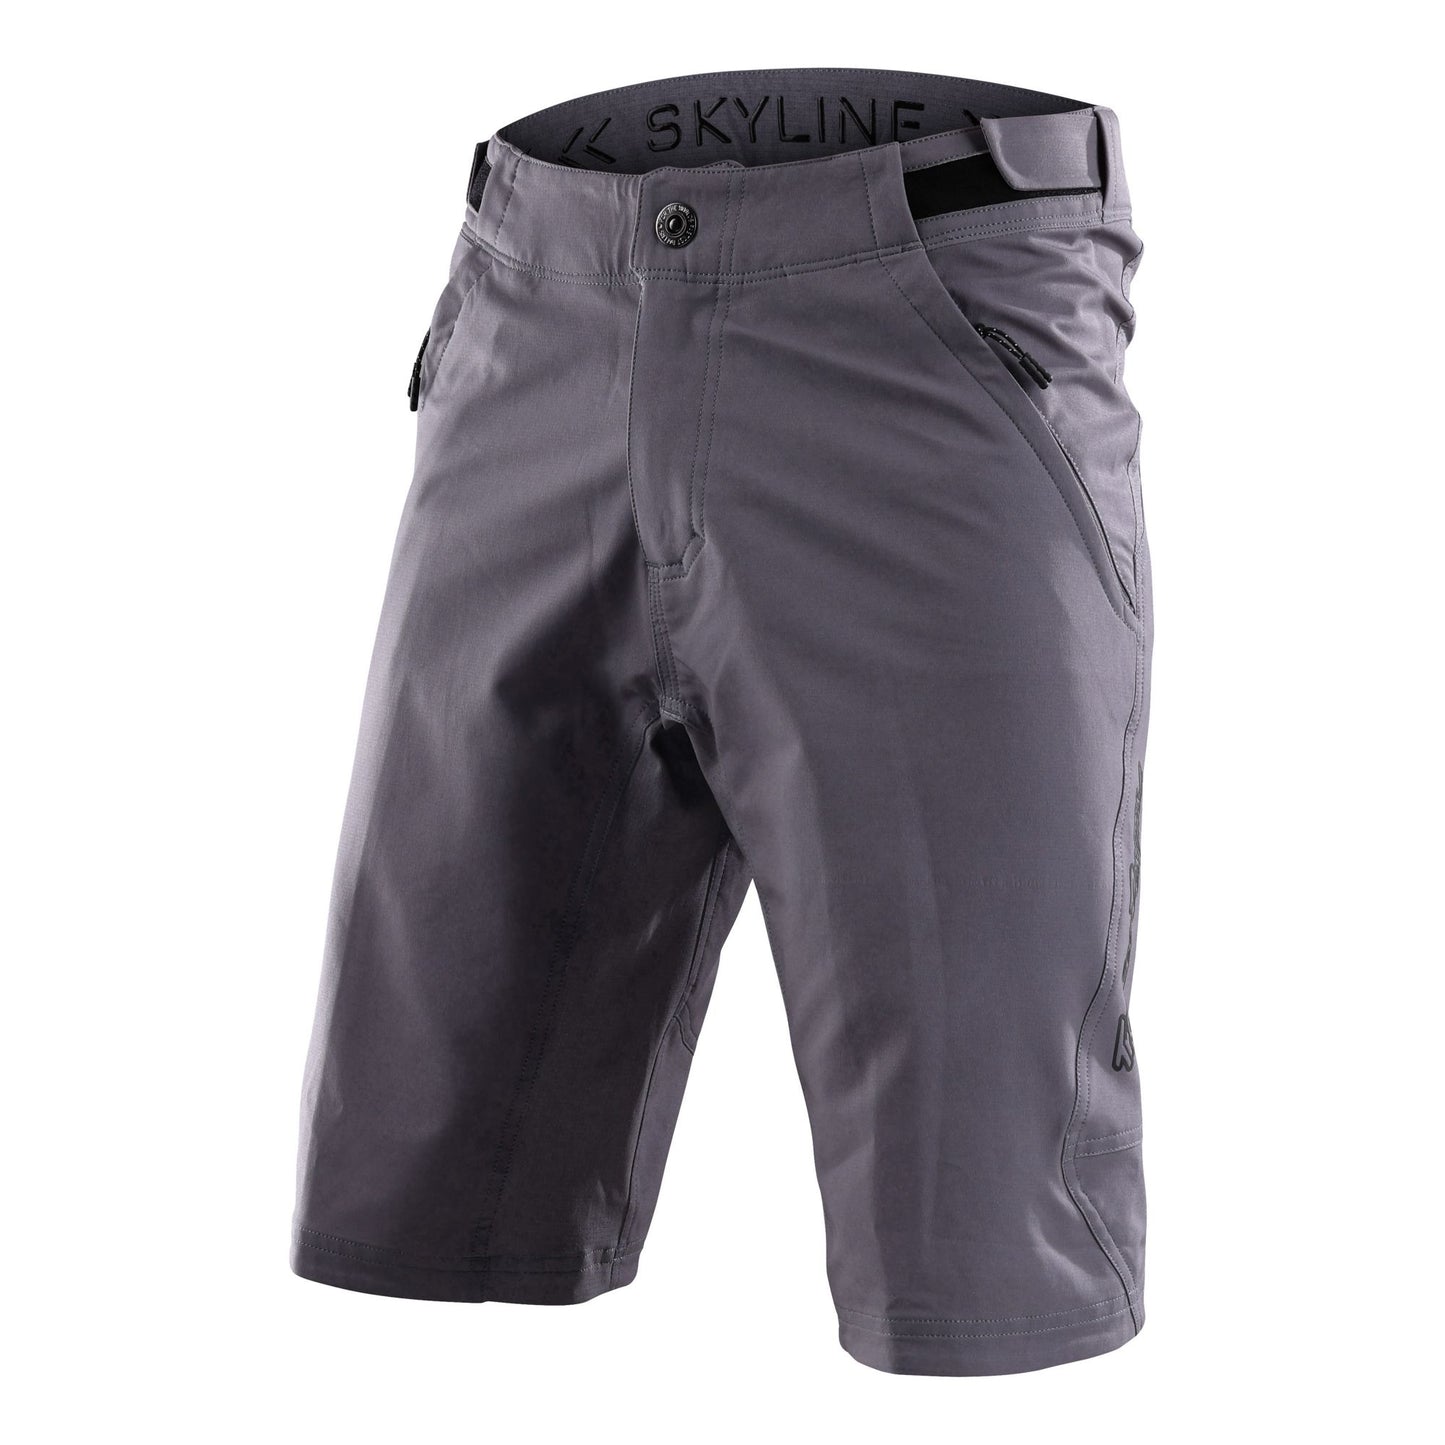 Troy Lee Designs Skyline Short w/ Liner Mono Charcoal Bike Shorts